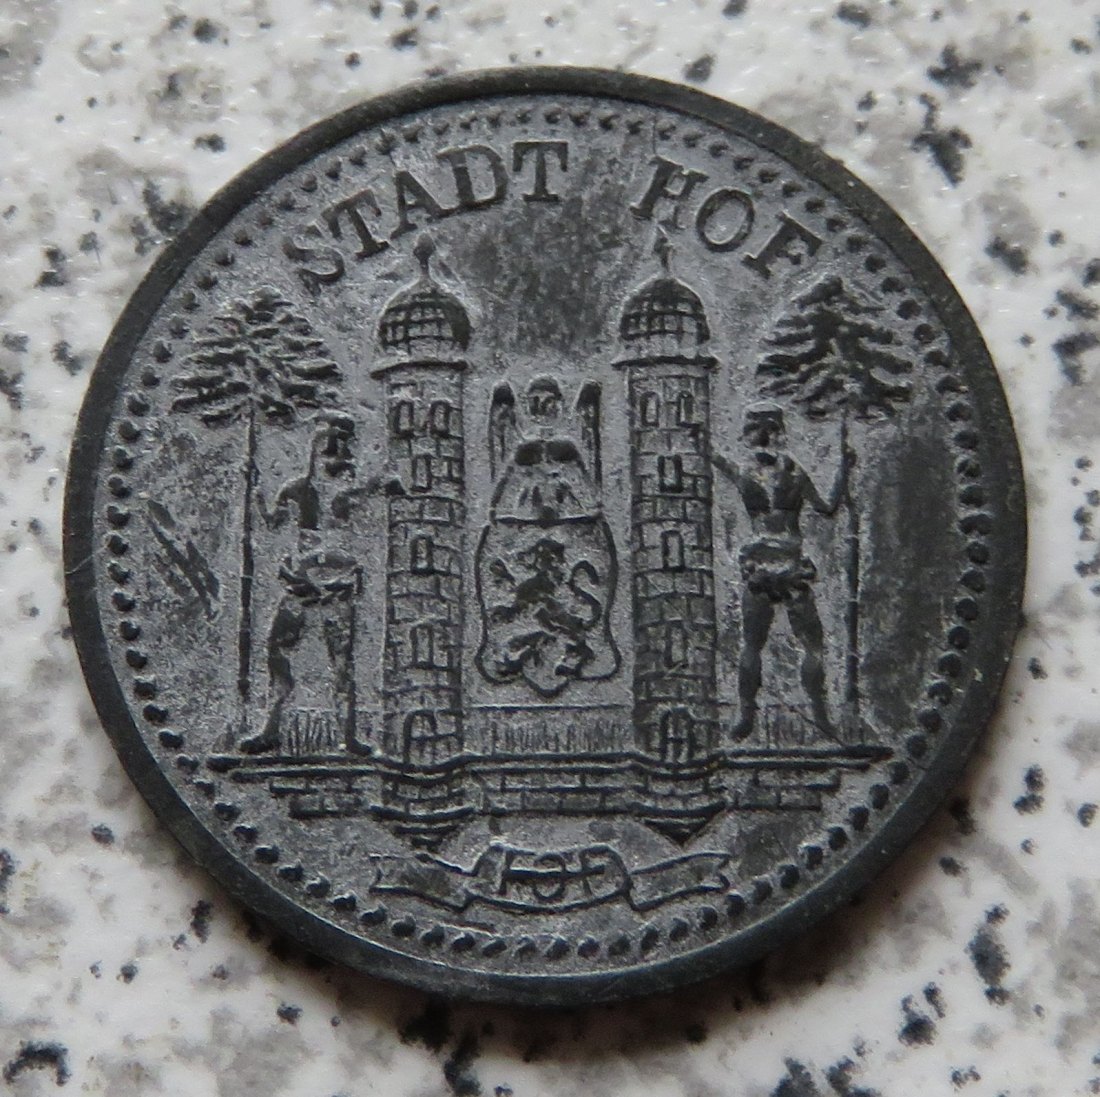  Hof 10 Pfennig 1918   